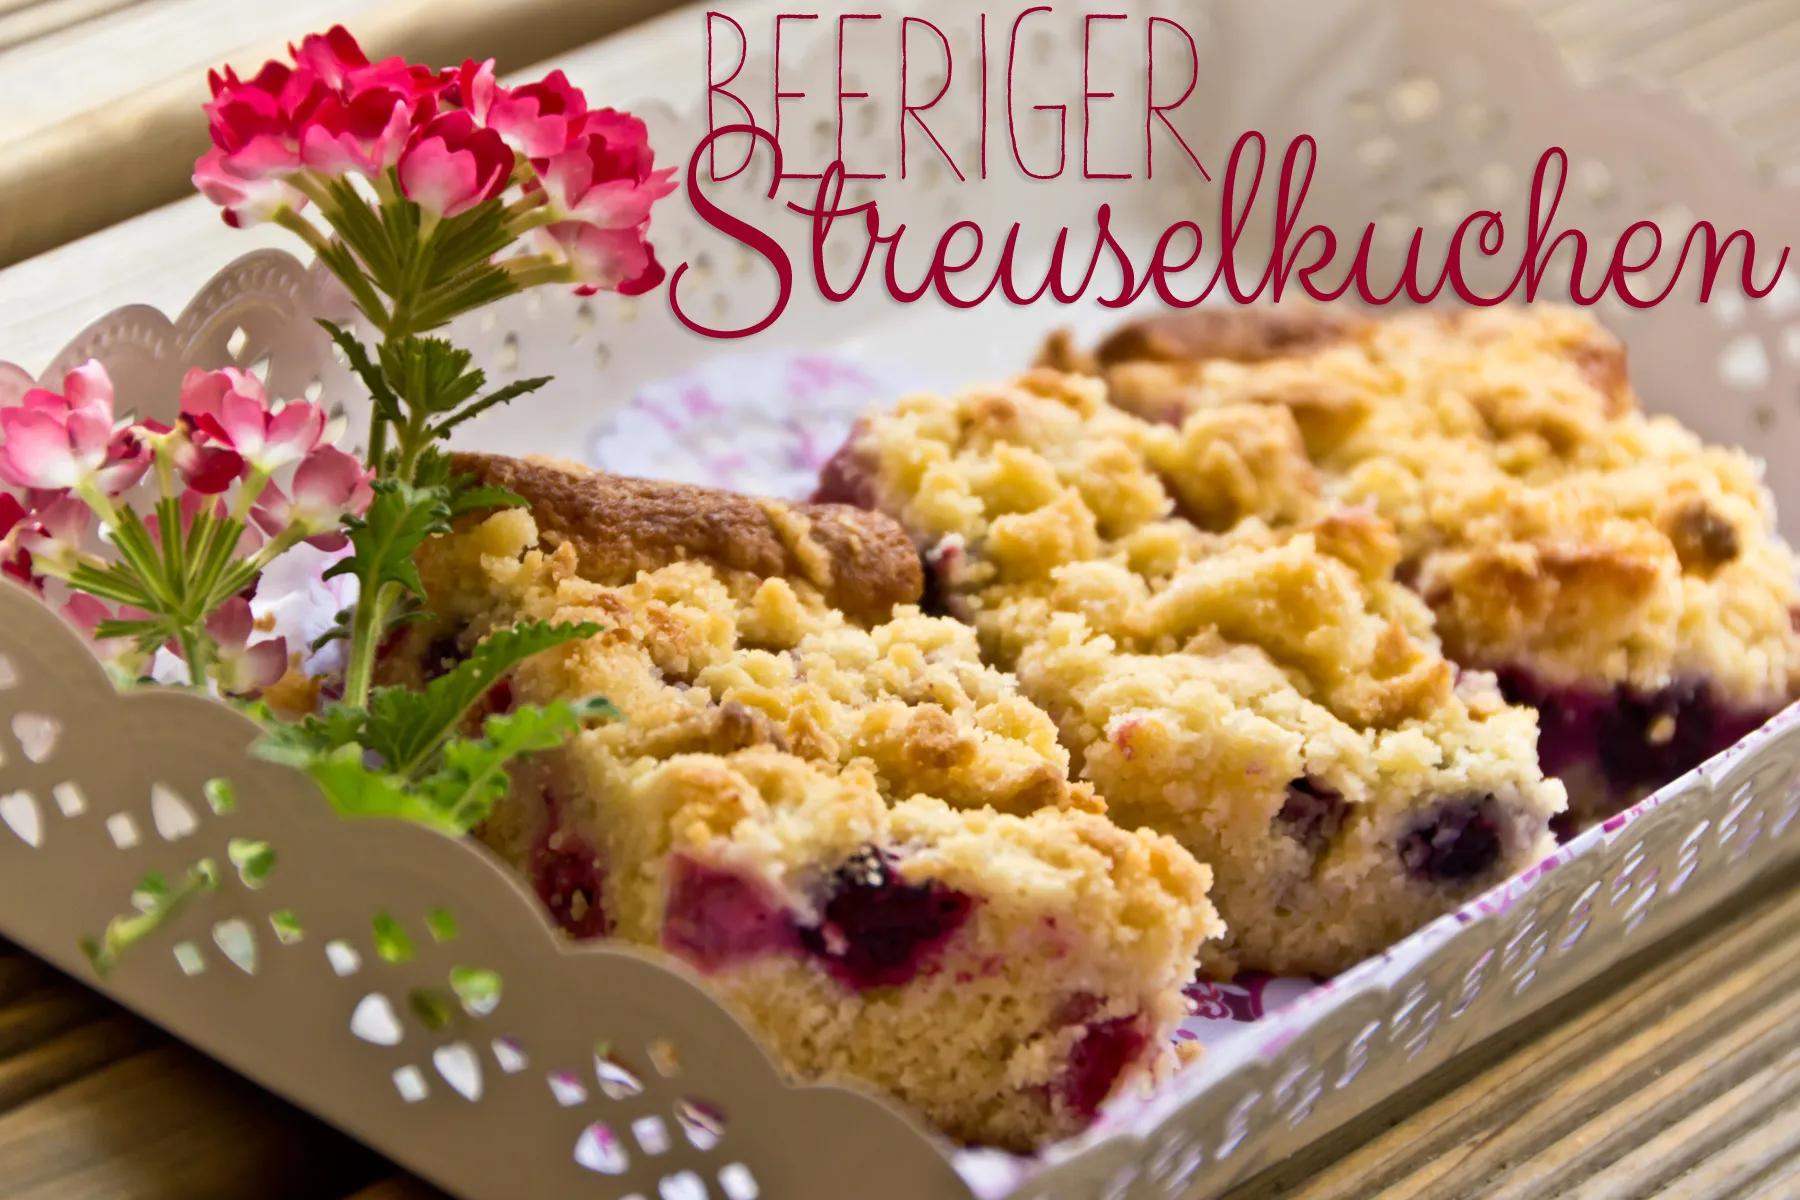 Beeriger Streuselkuchen | Marie-Theres Schindler - Beauty Blog